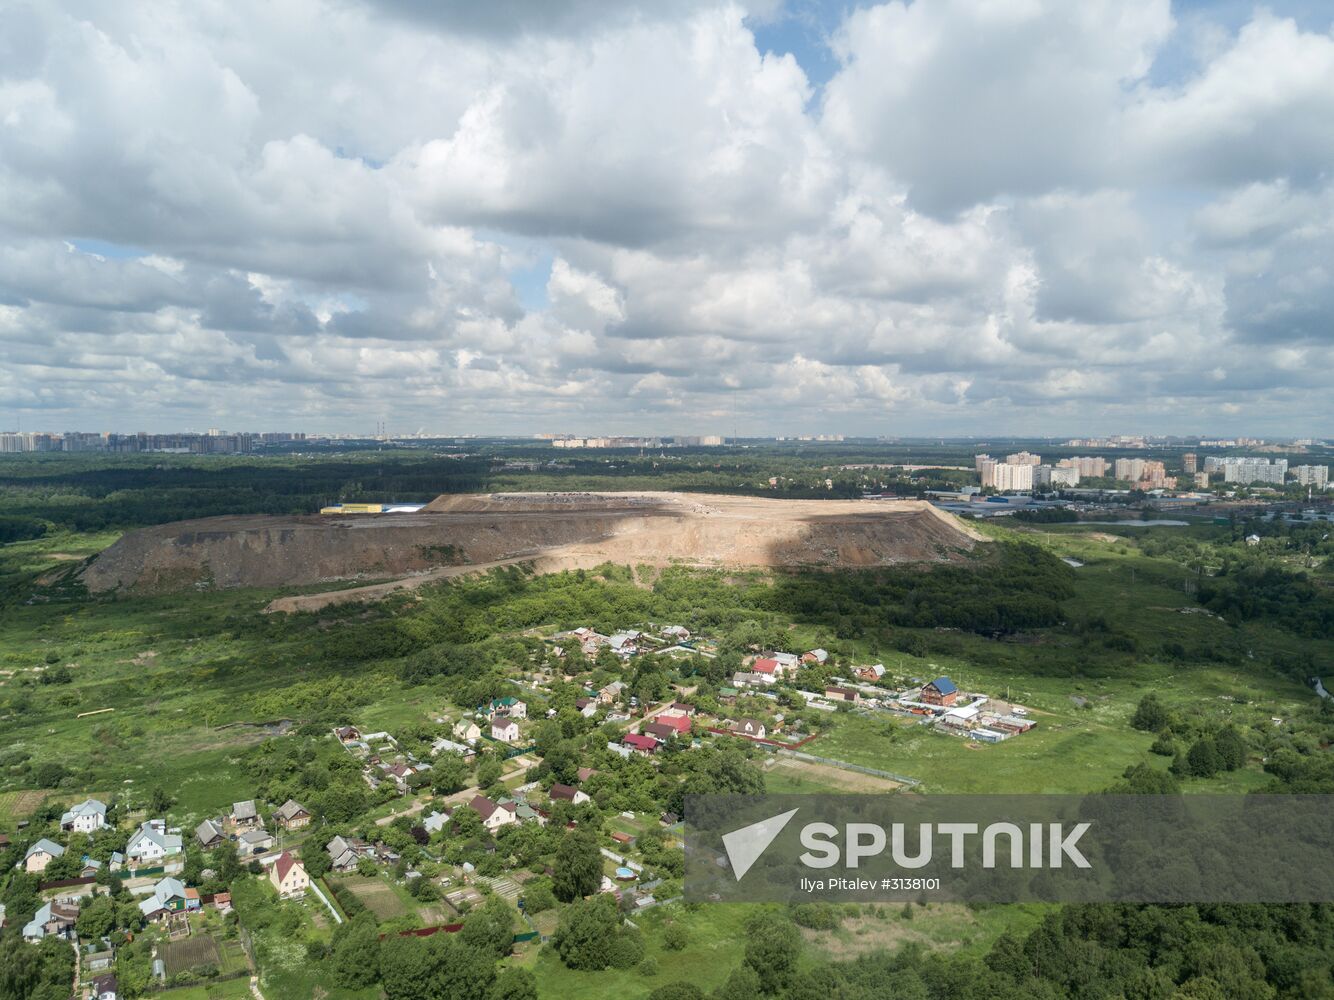 Kuchino dump site in Balashikha | Sputnik Mediabank